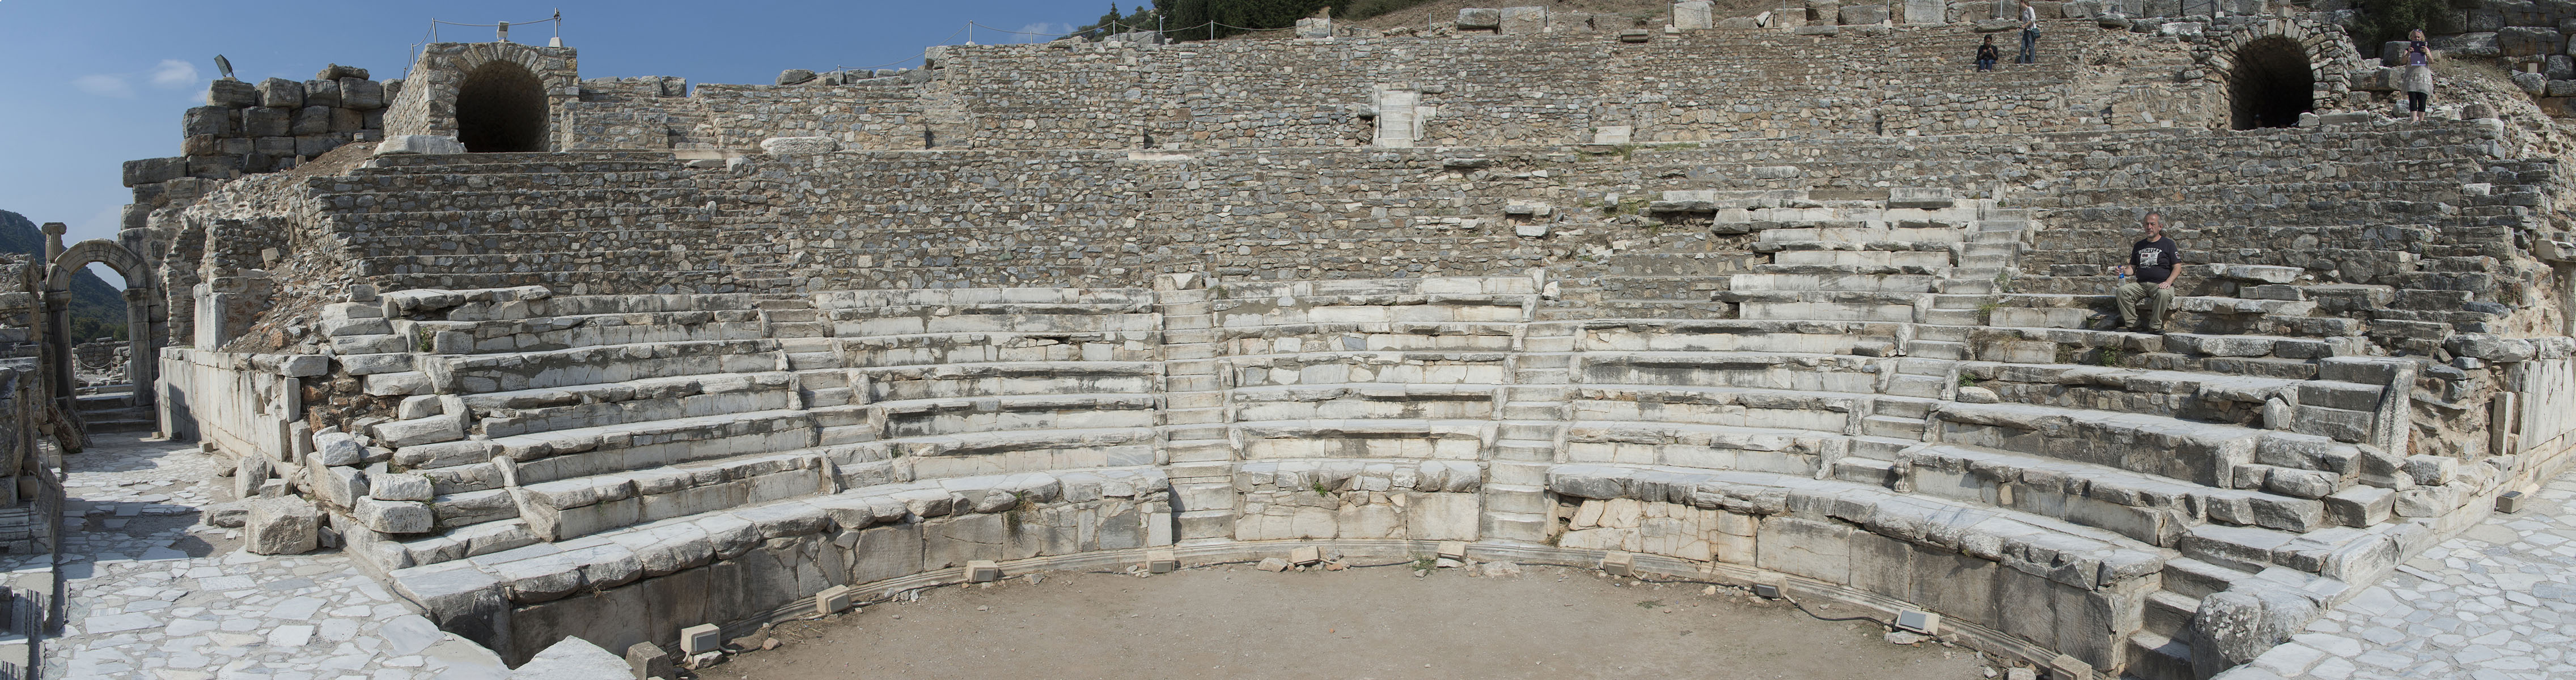 Ephesus Odeon October 2015 2837 Panorama.jpg